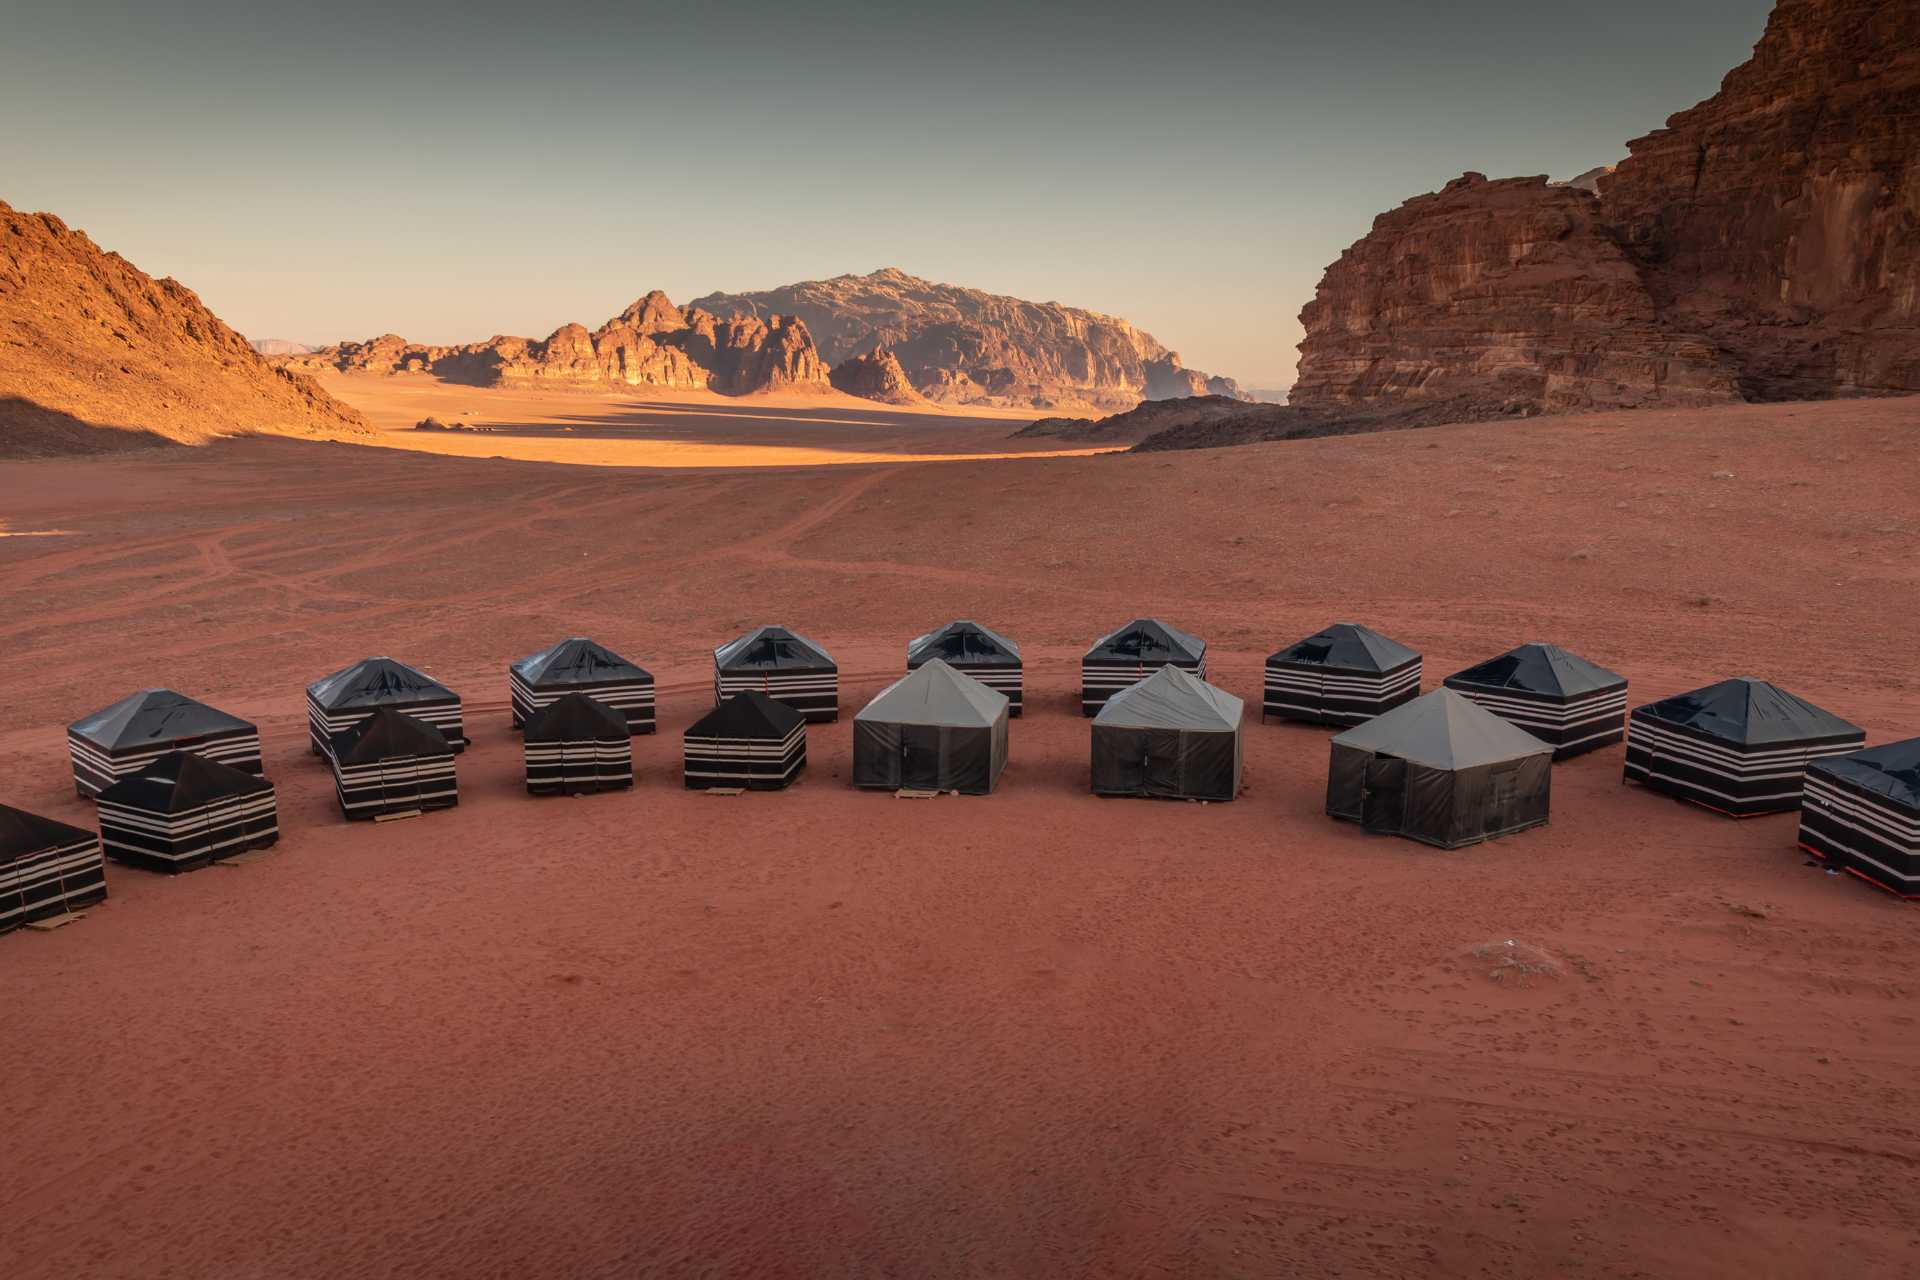 Beduin tourist campsite in Wadi Rum desert, Jordan at sunrise from Getty Images